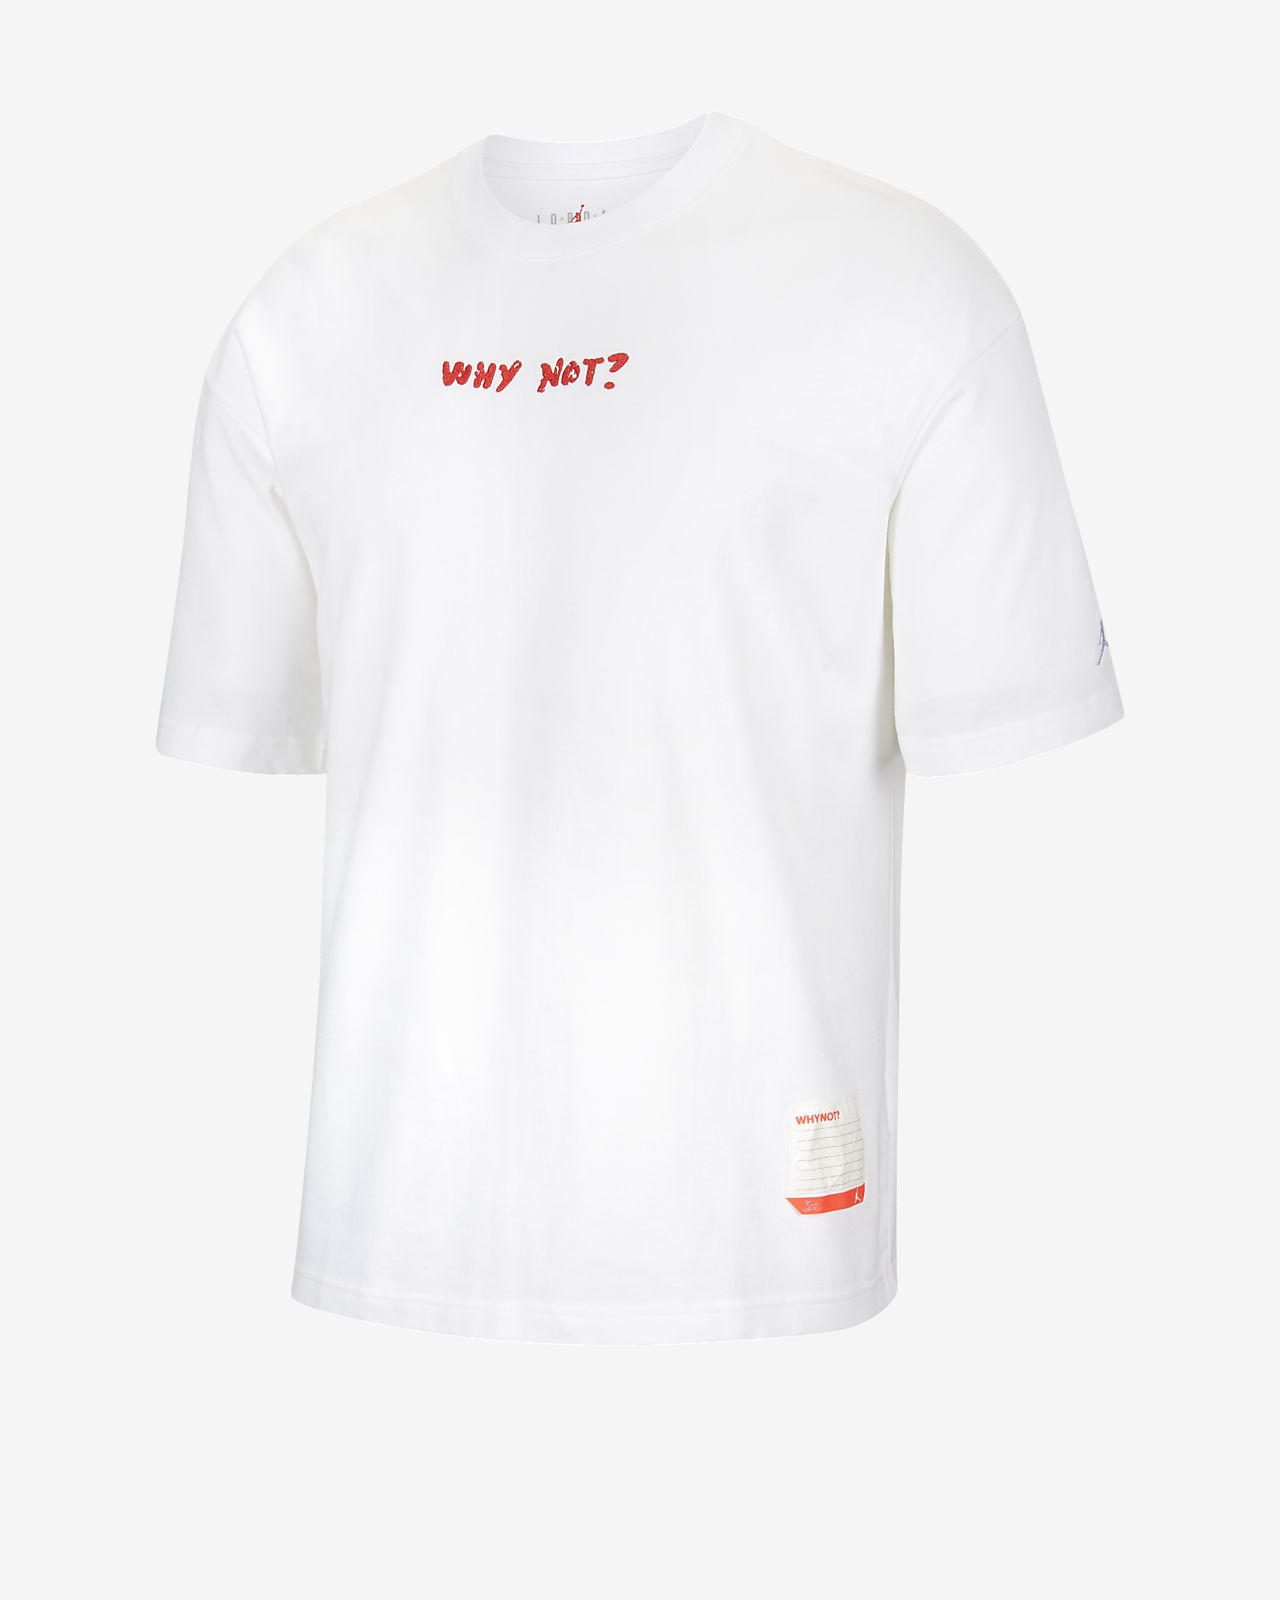 Nikeid T Shirt Off 78 Www Gentlementours Hu - t shirts roblox boy coolmine community school